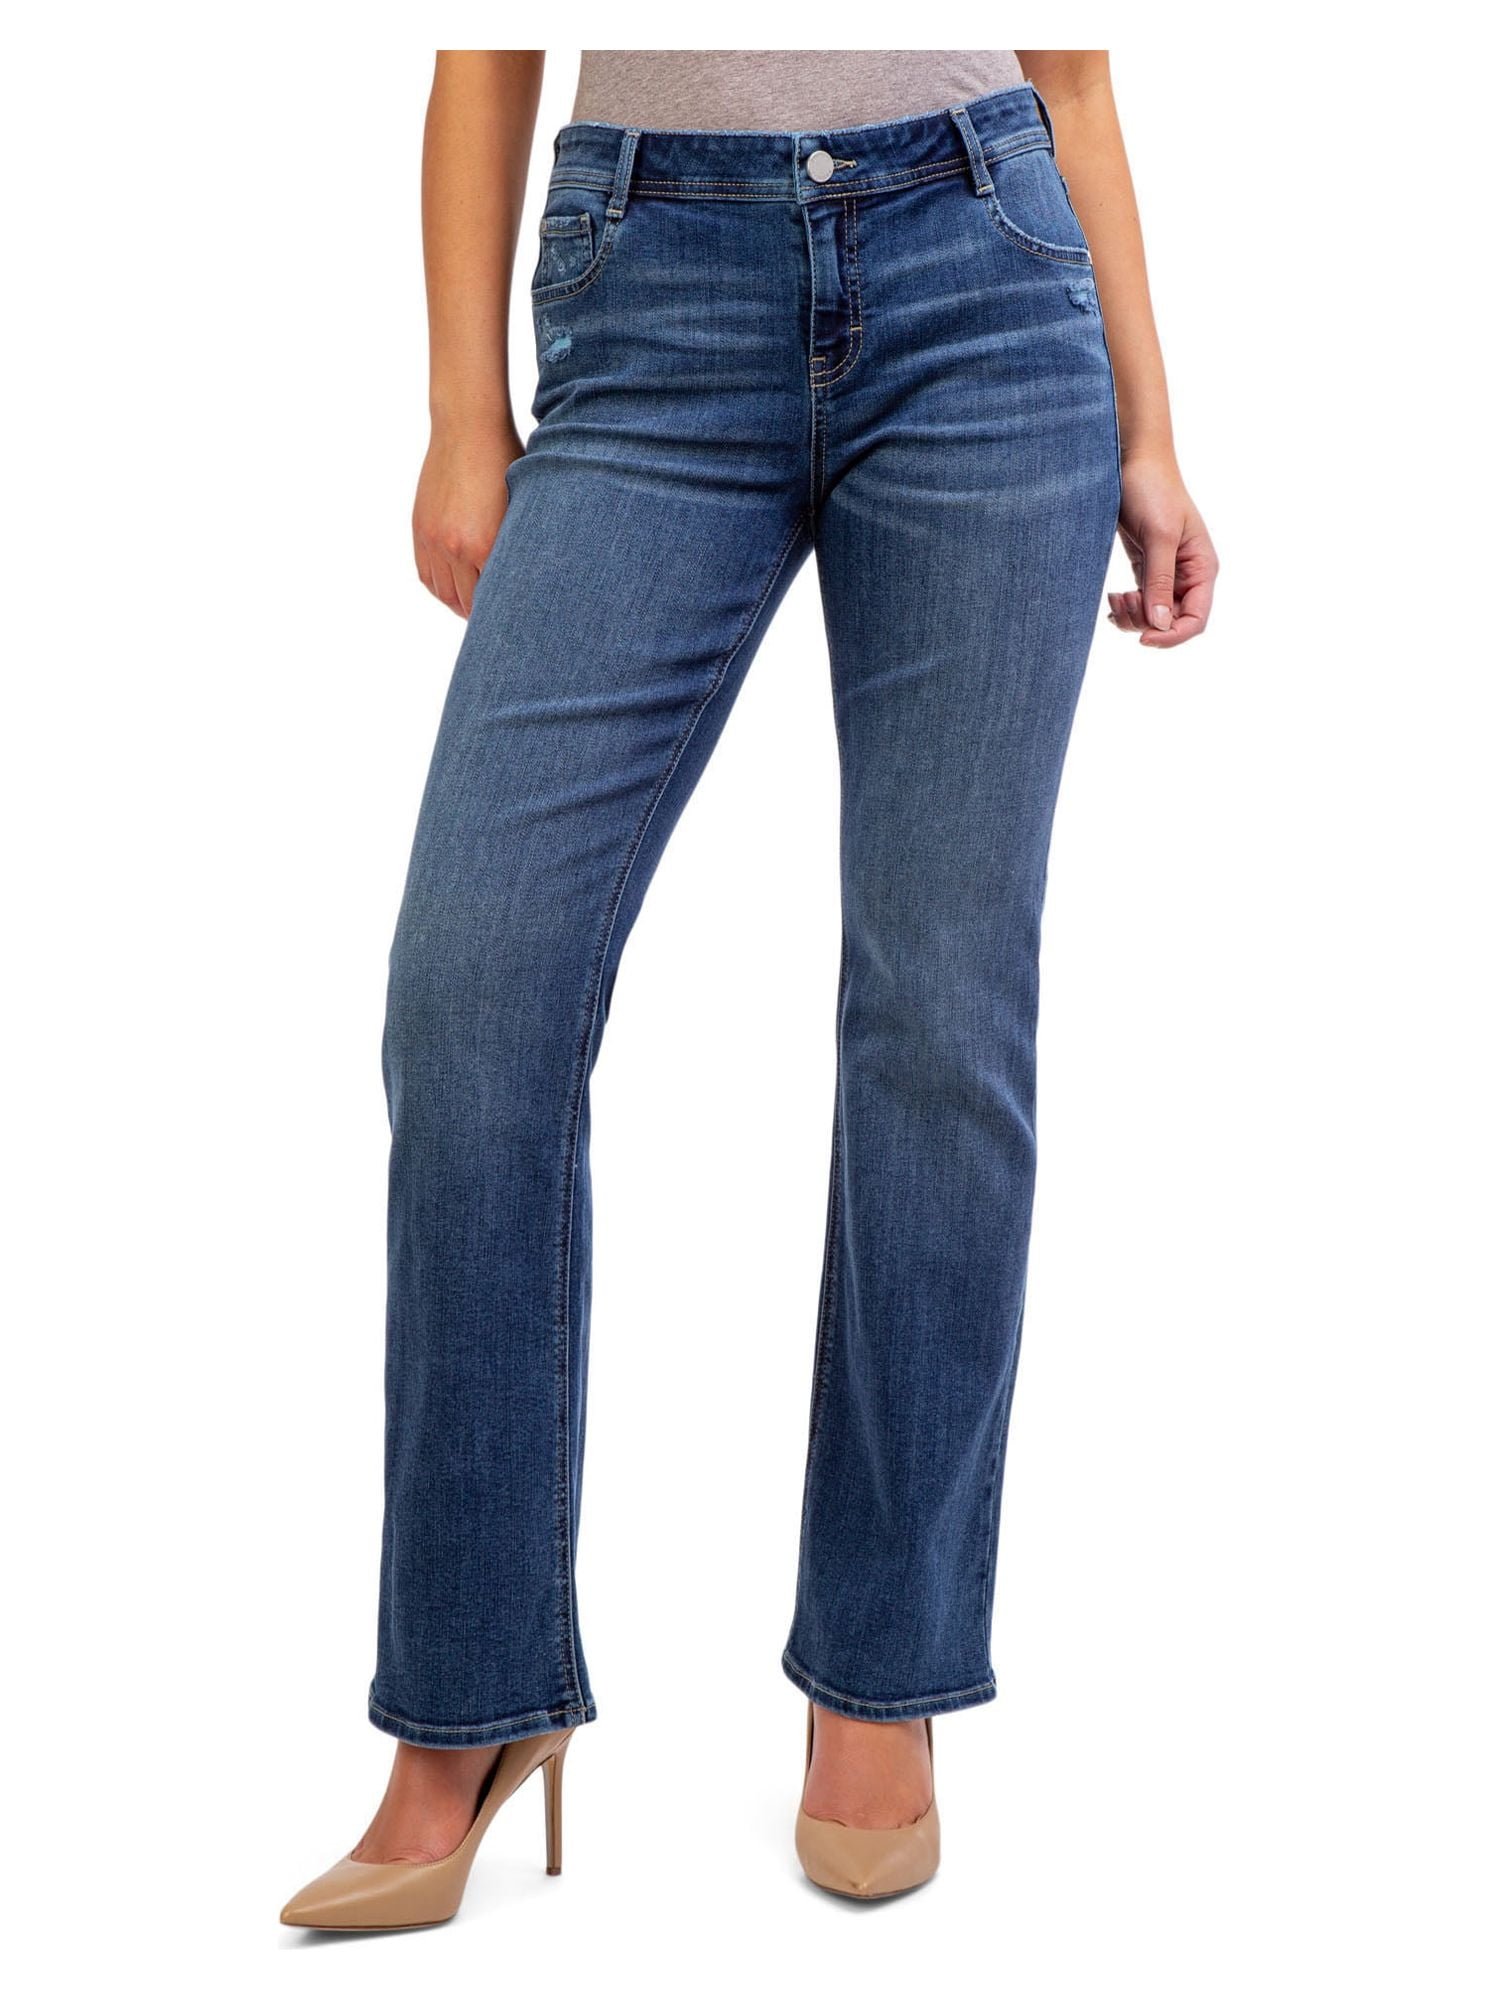 Jordache Women’s Mid Rise Bootcut Jeans, Regular and Short Inseam ...